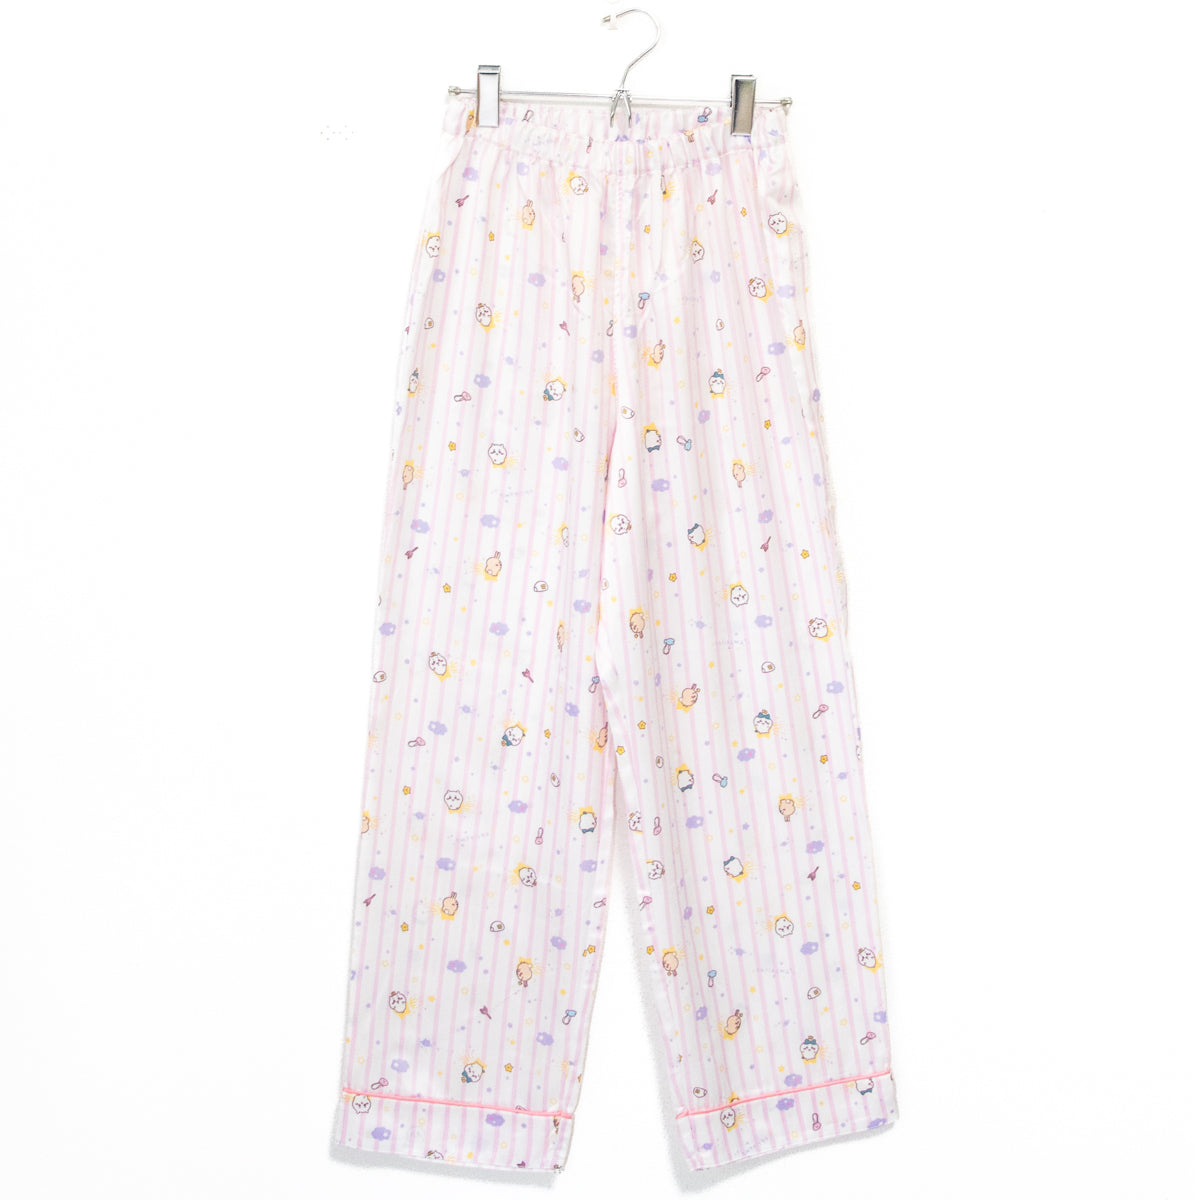 Chiikawa Pajamas for Adults, WHITE, Off-White